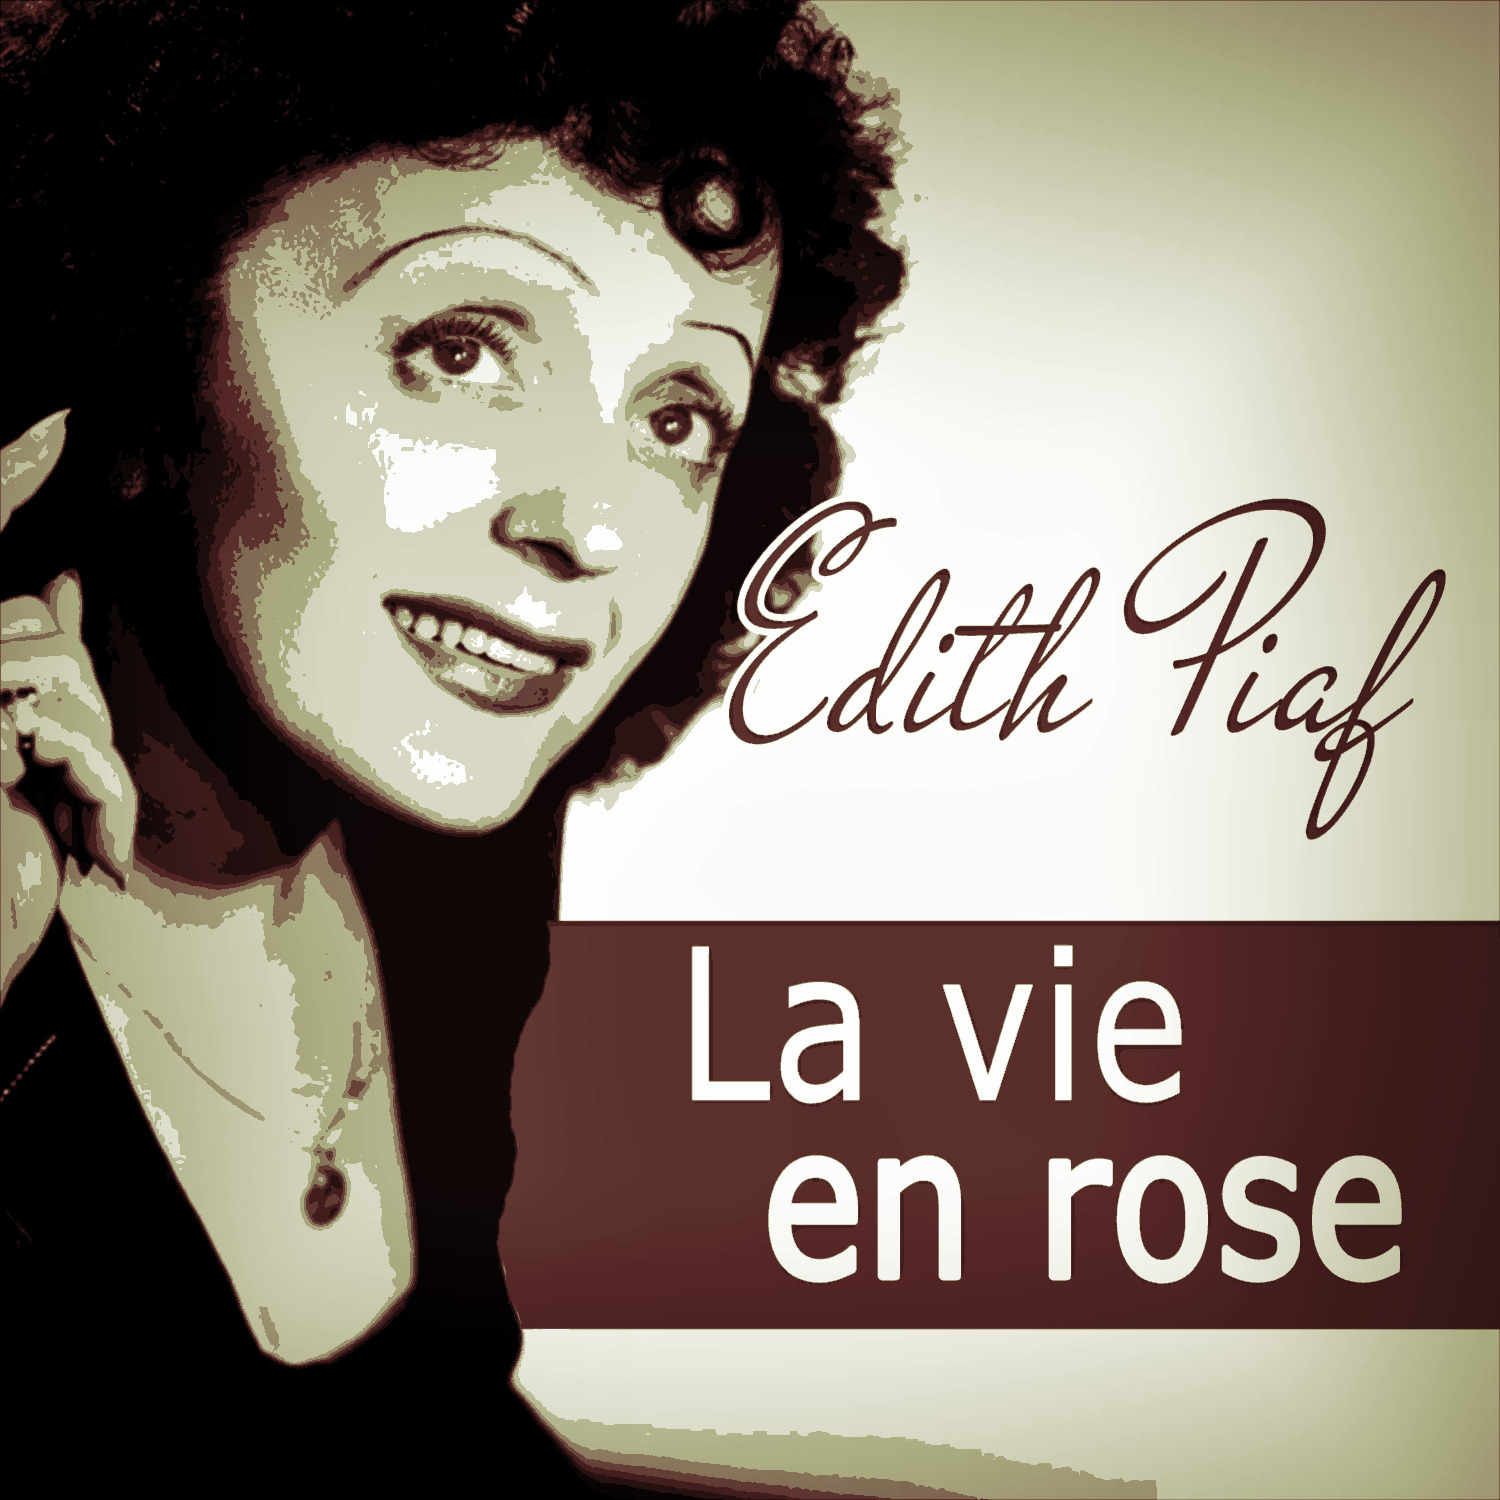 La vie en rose Edith Piaf Friends 高音质在线试听 La vie en rose歌词 歌曲下载 酷狗音乐